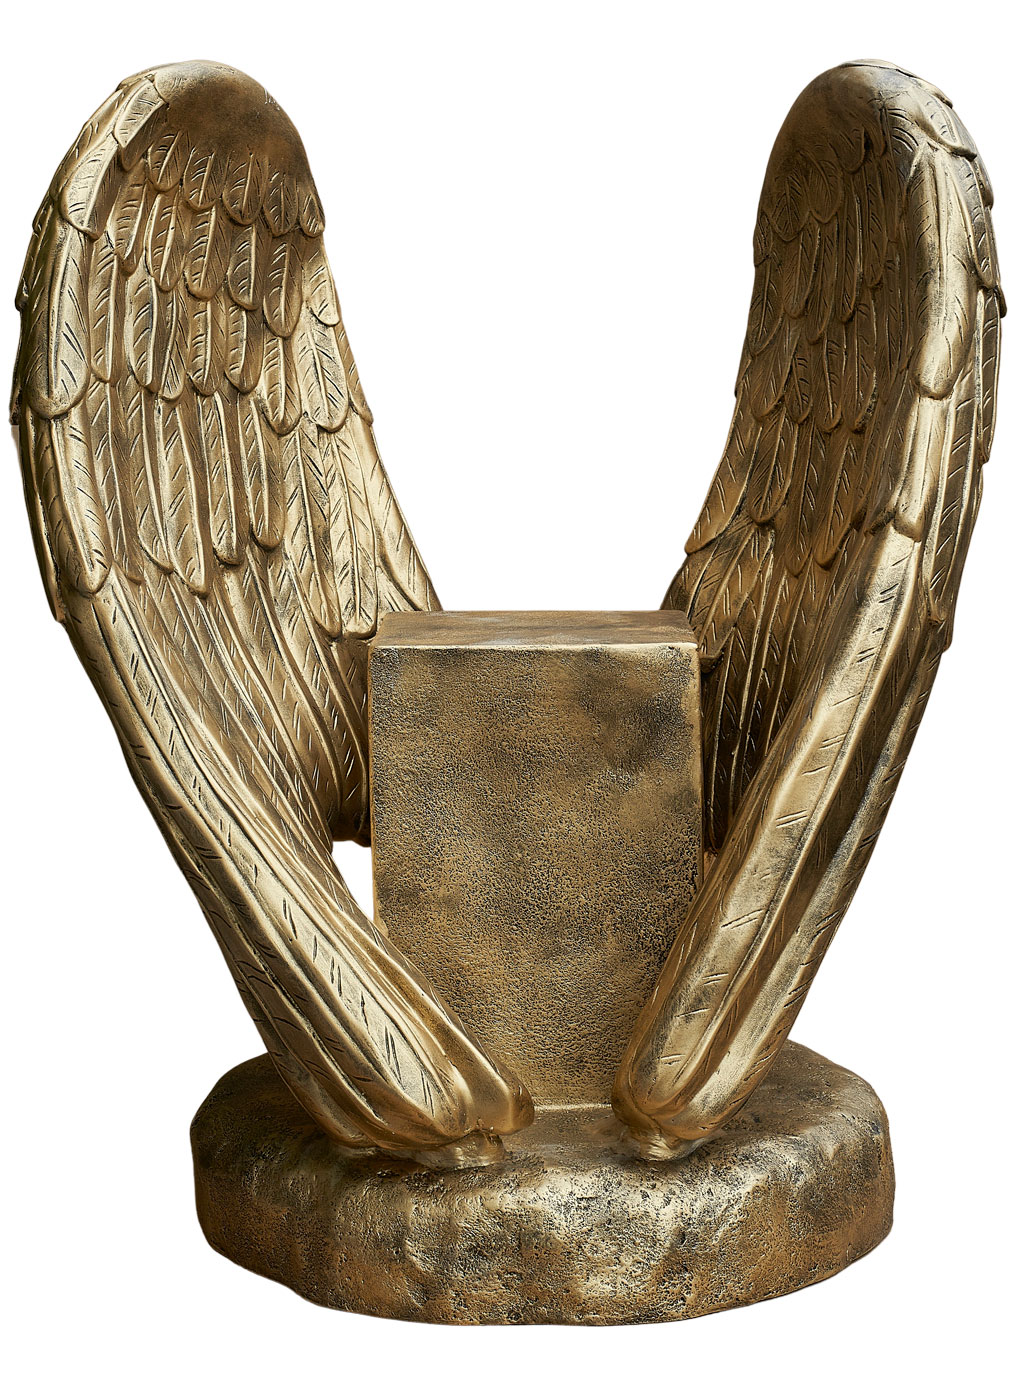 Kolumna ze skrzydłami - Rzeźba nagrobna - 95-100 cm - R 77